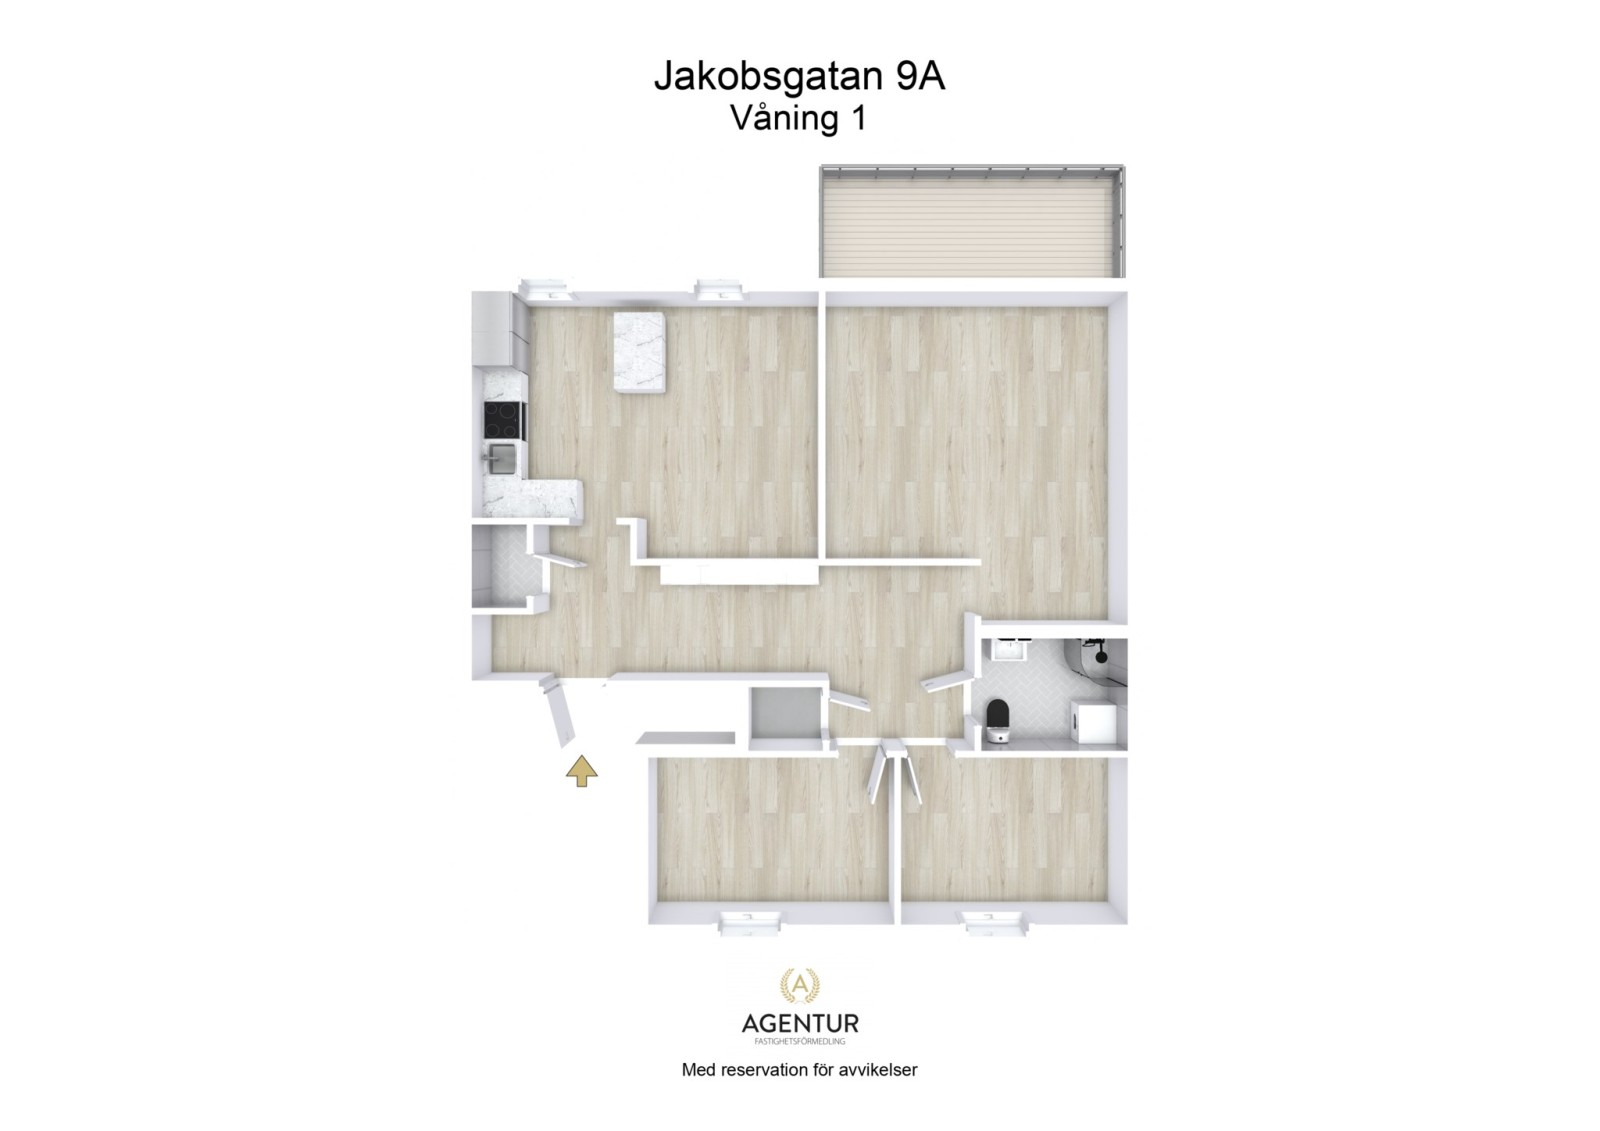 3D Floor Plan - Våning 1 - Letterhead Jakobsgatan 9A